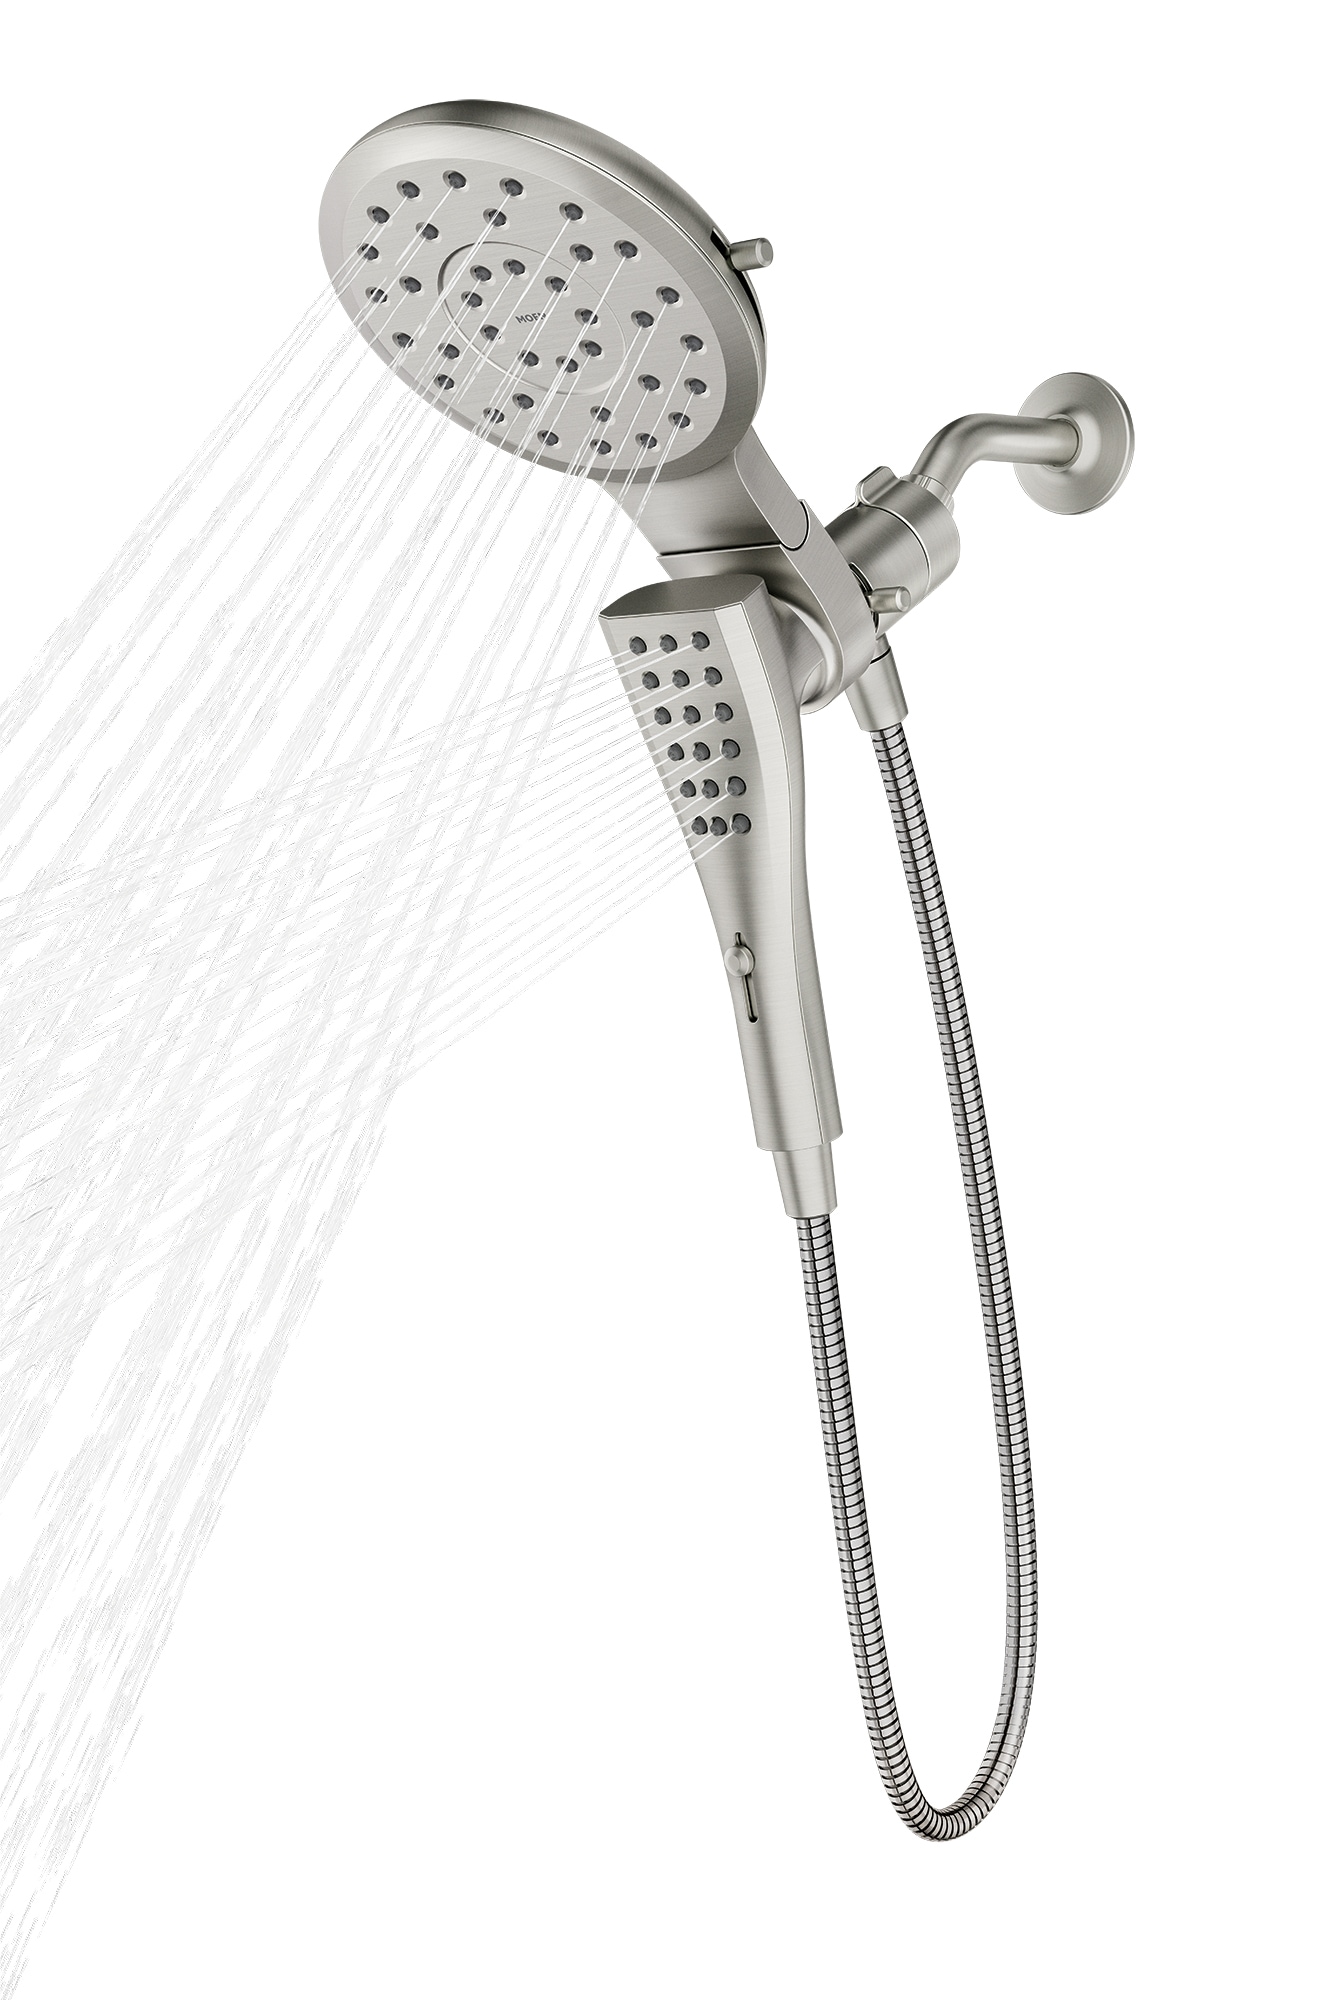 Shower Head with Remote, 12 - 2 Sprays, 1.75gpm